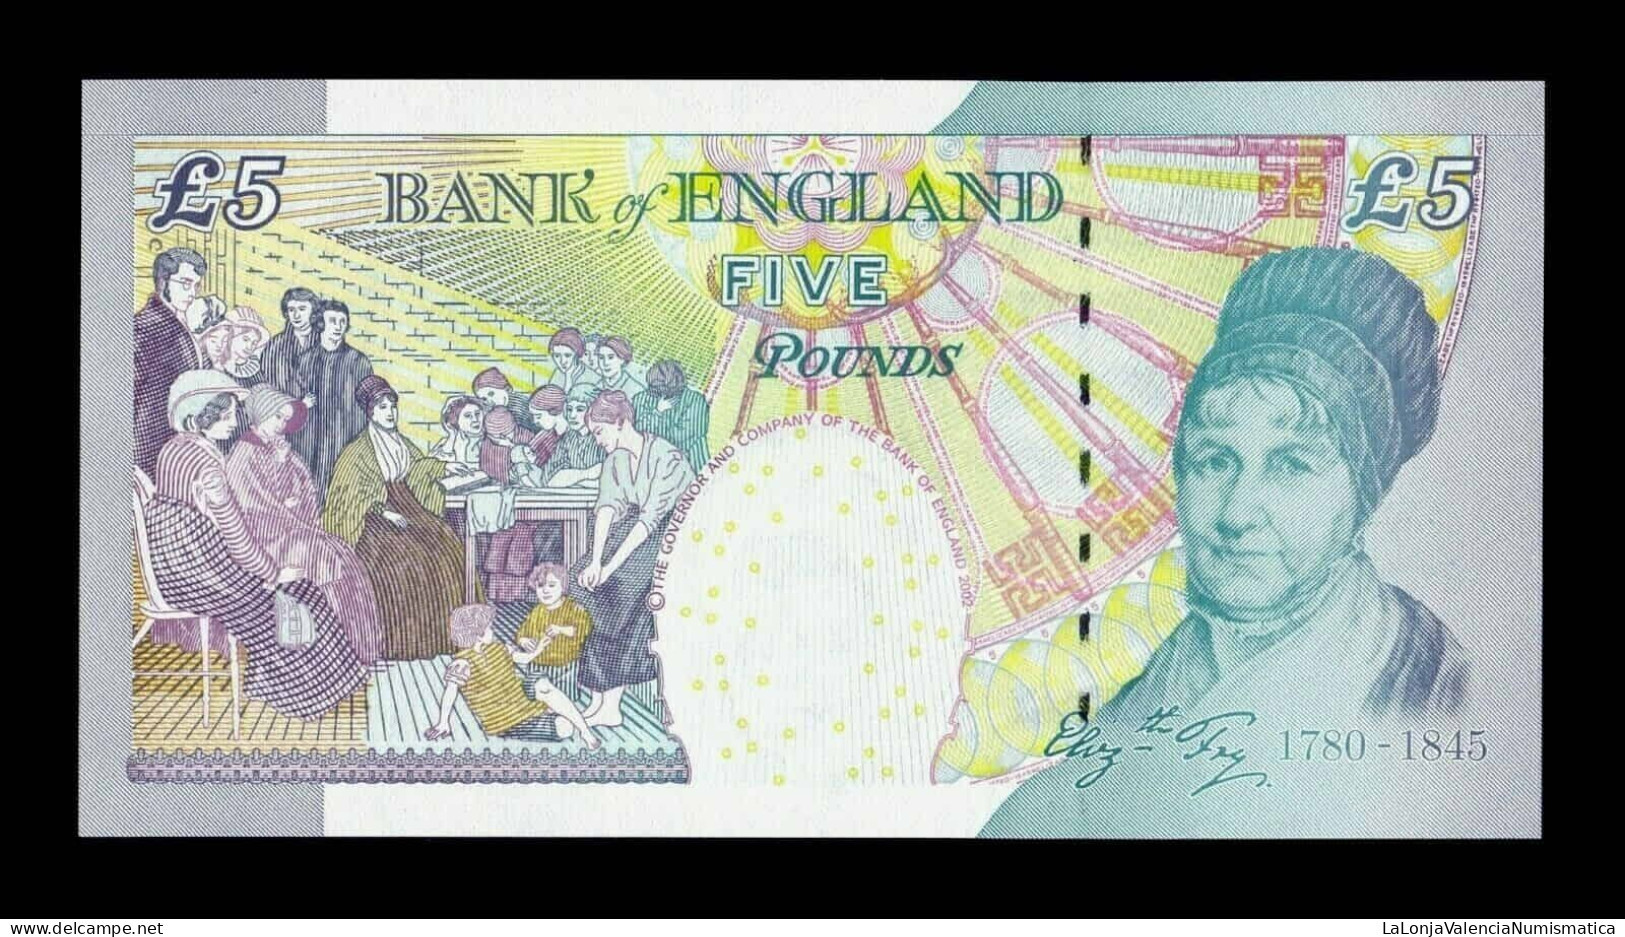 Gran Bretaña Great Britain Lot 5 Banknotes 5 Pounds Elizabeth II 2002 Pick 391d Sc Unc - 5 Pond